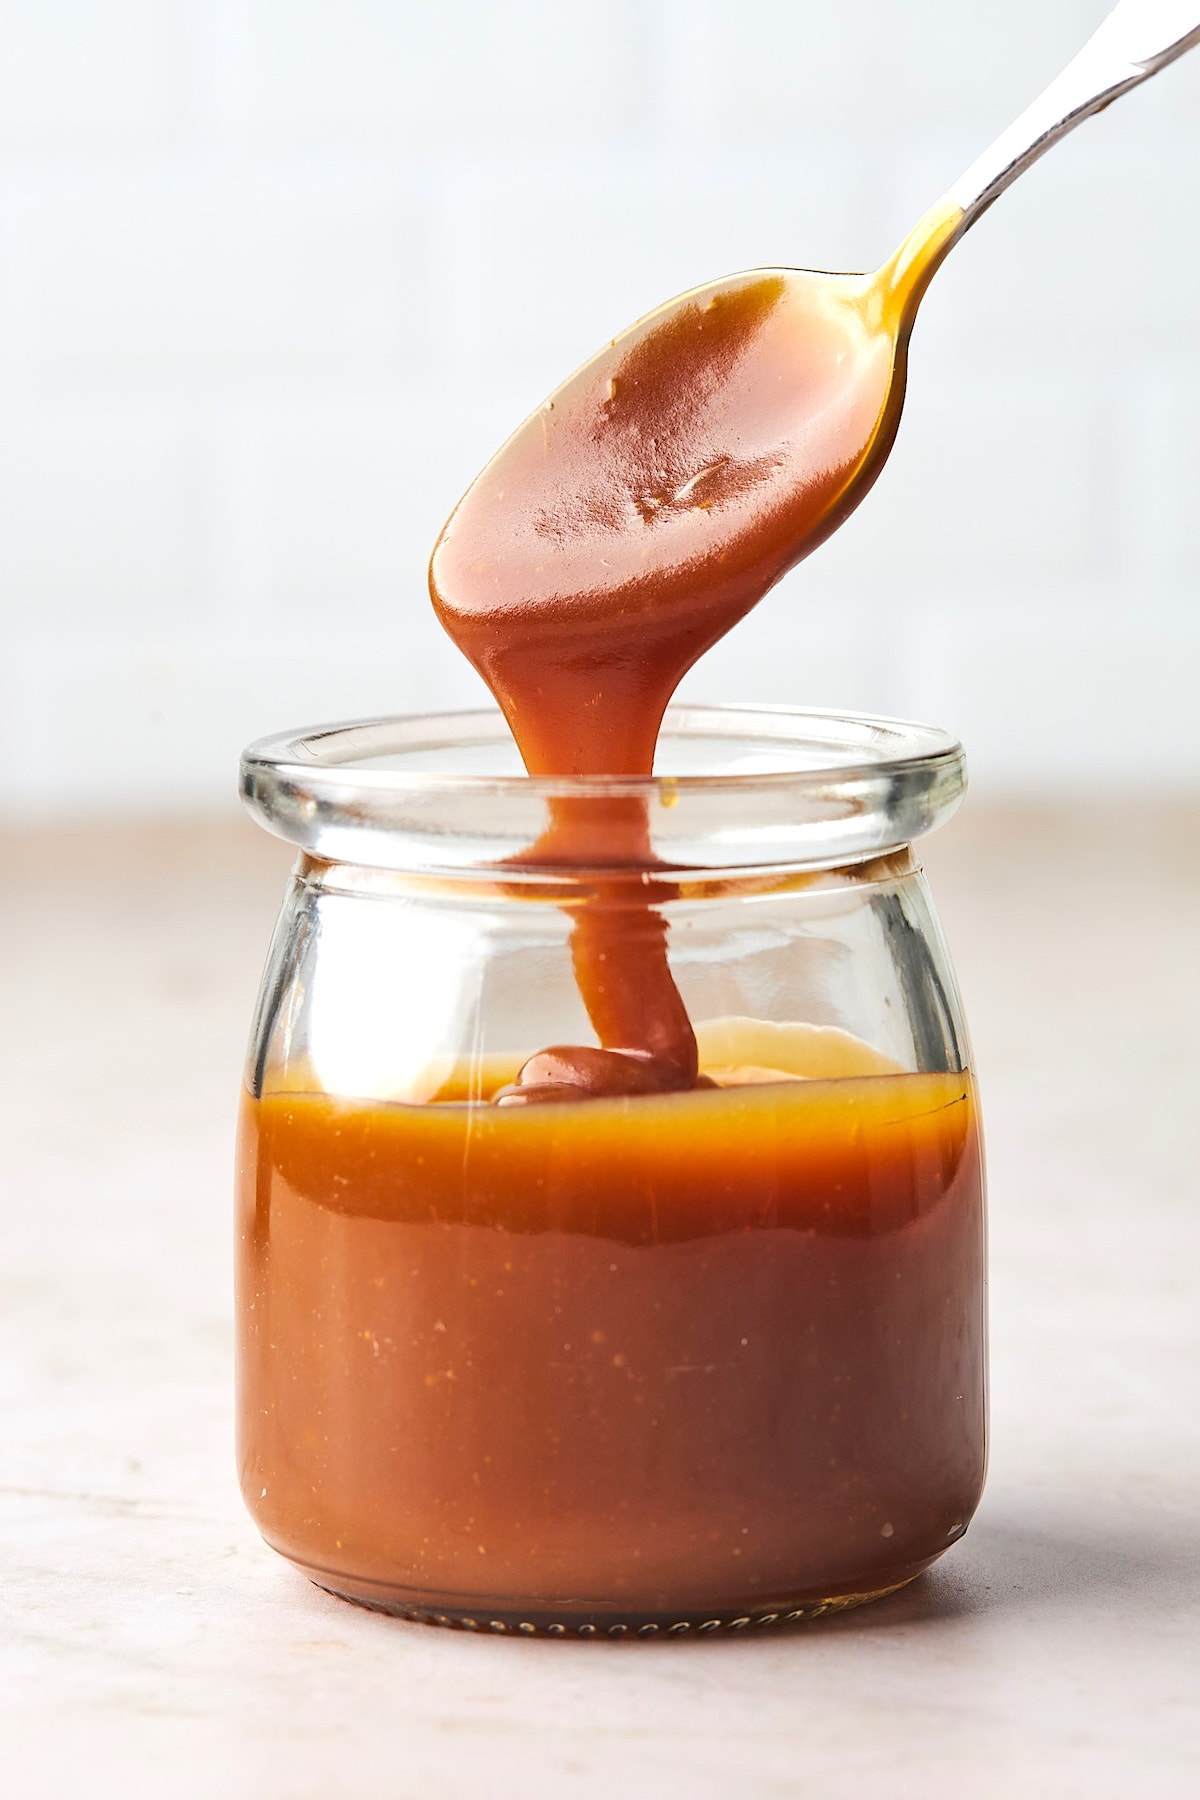 Salted Caramel Sauce- Peas & Their